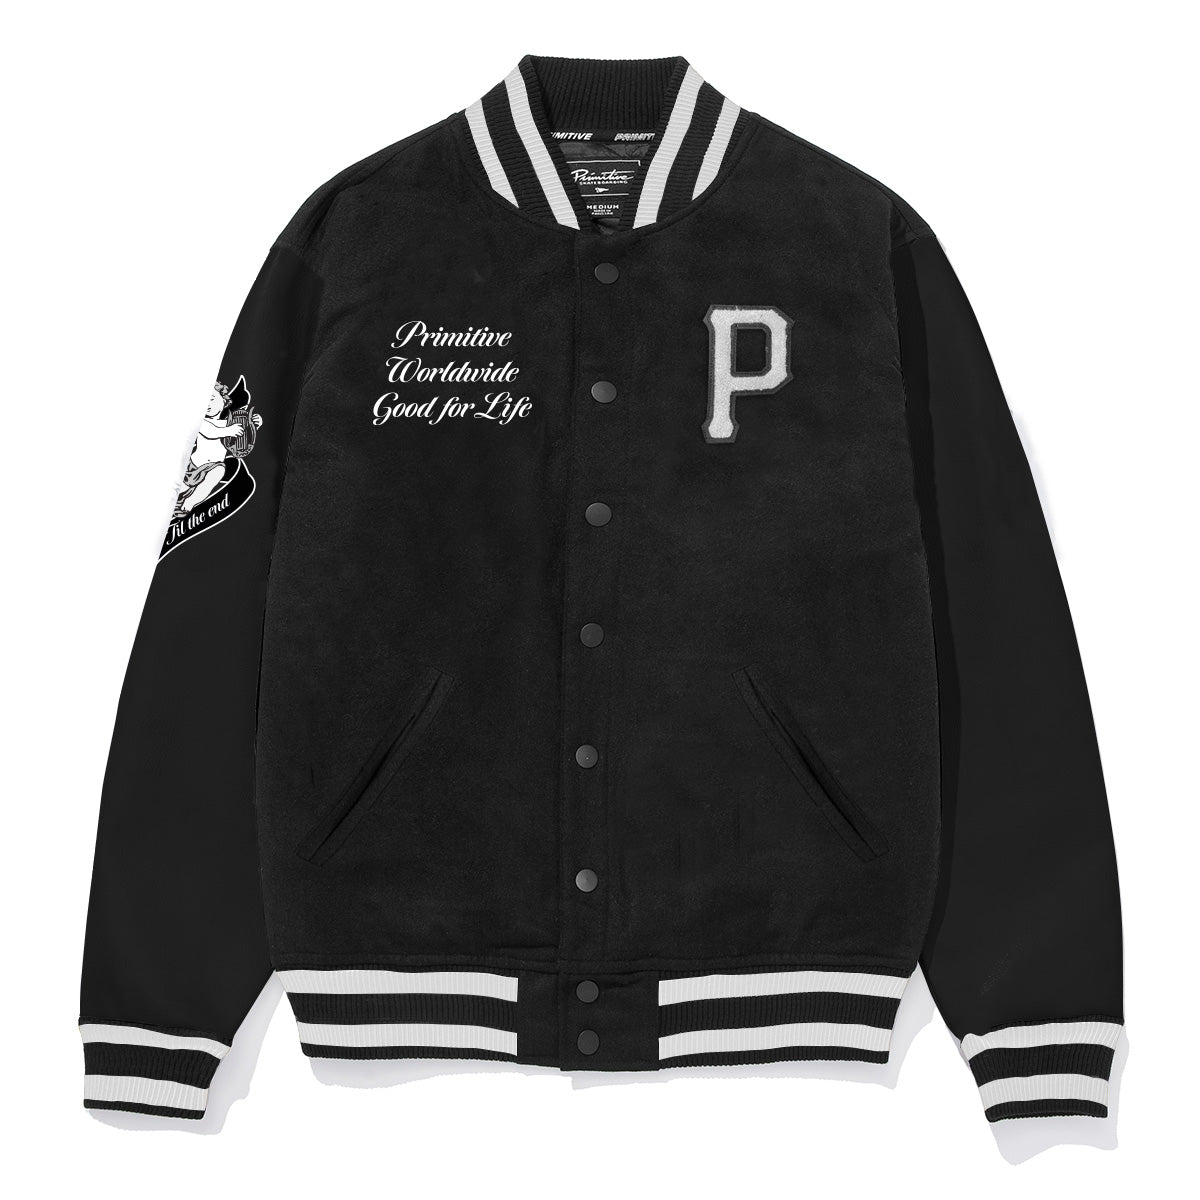 Primitive Skate Union Varsity Jacket - Black